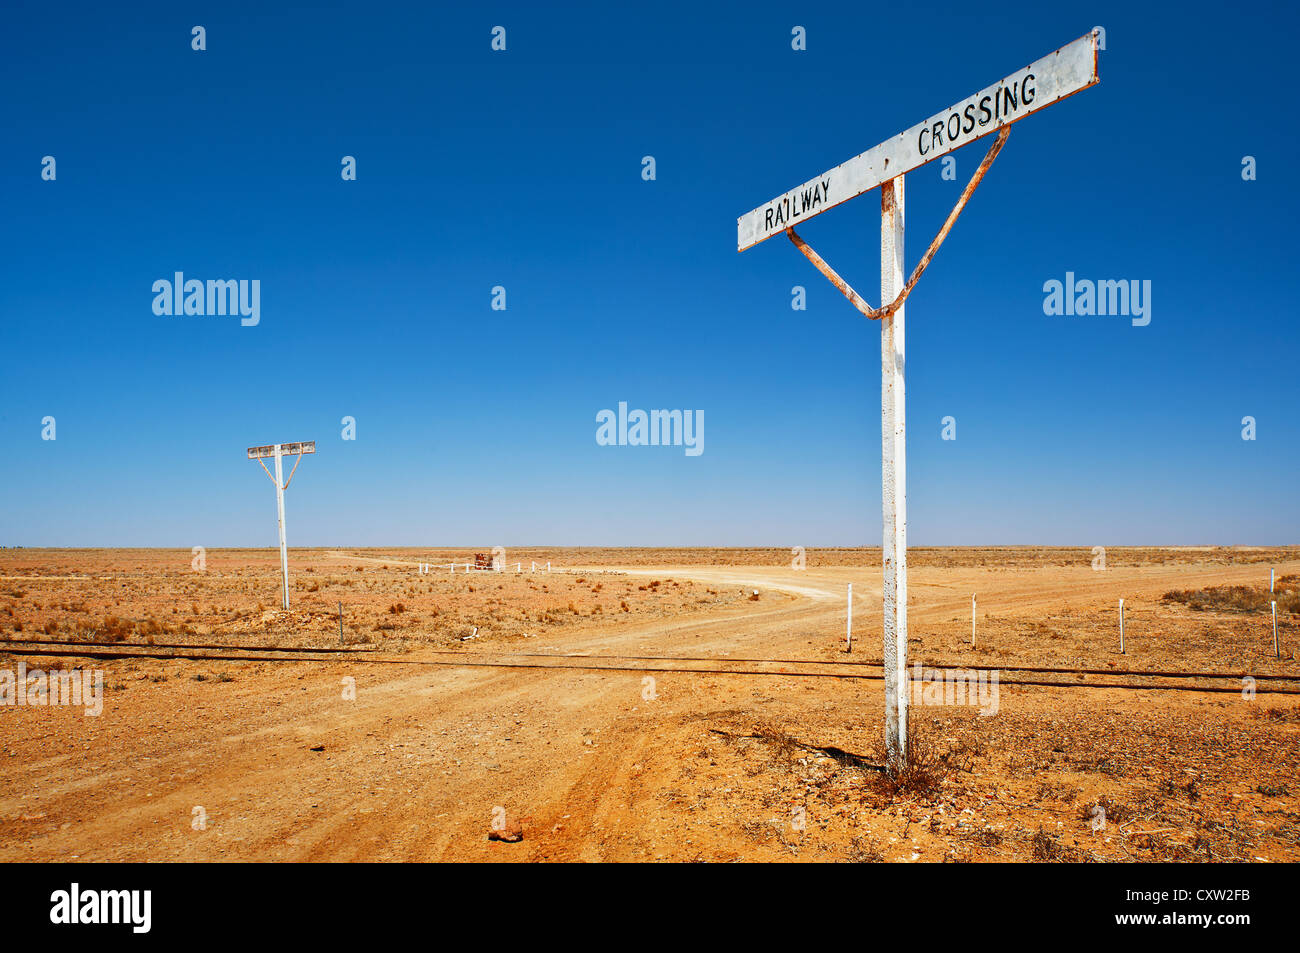 Old Railway Crossing In South Australia's desert. Stock Photo